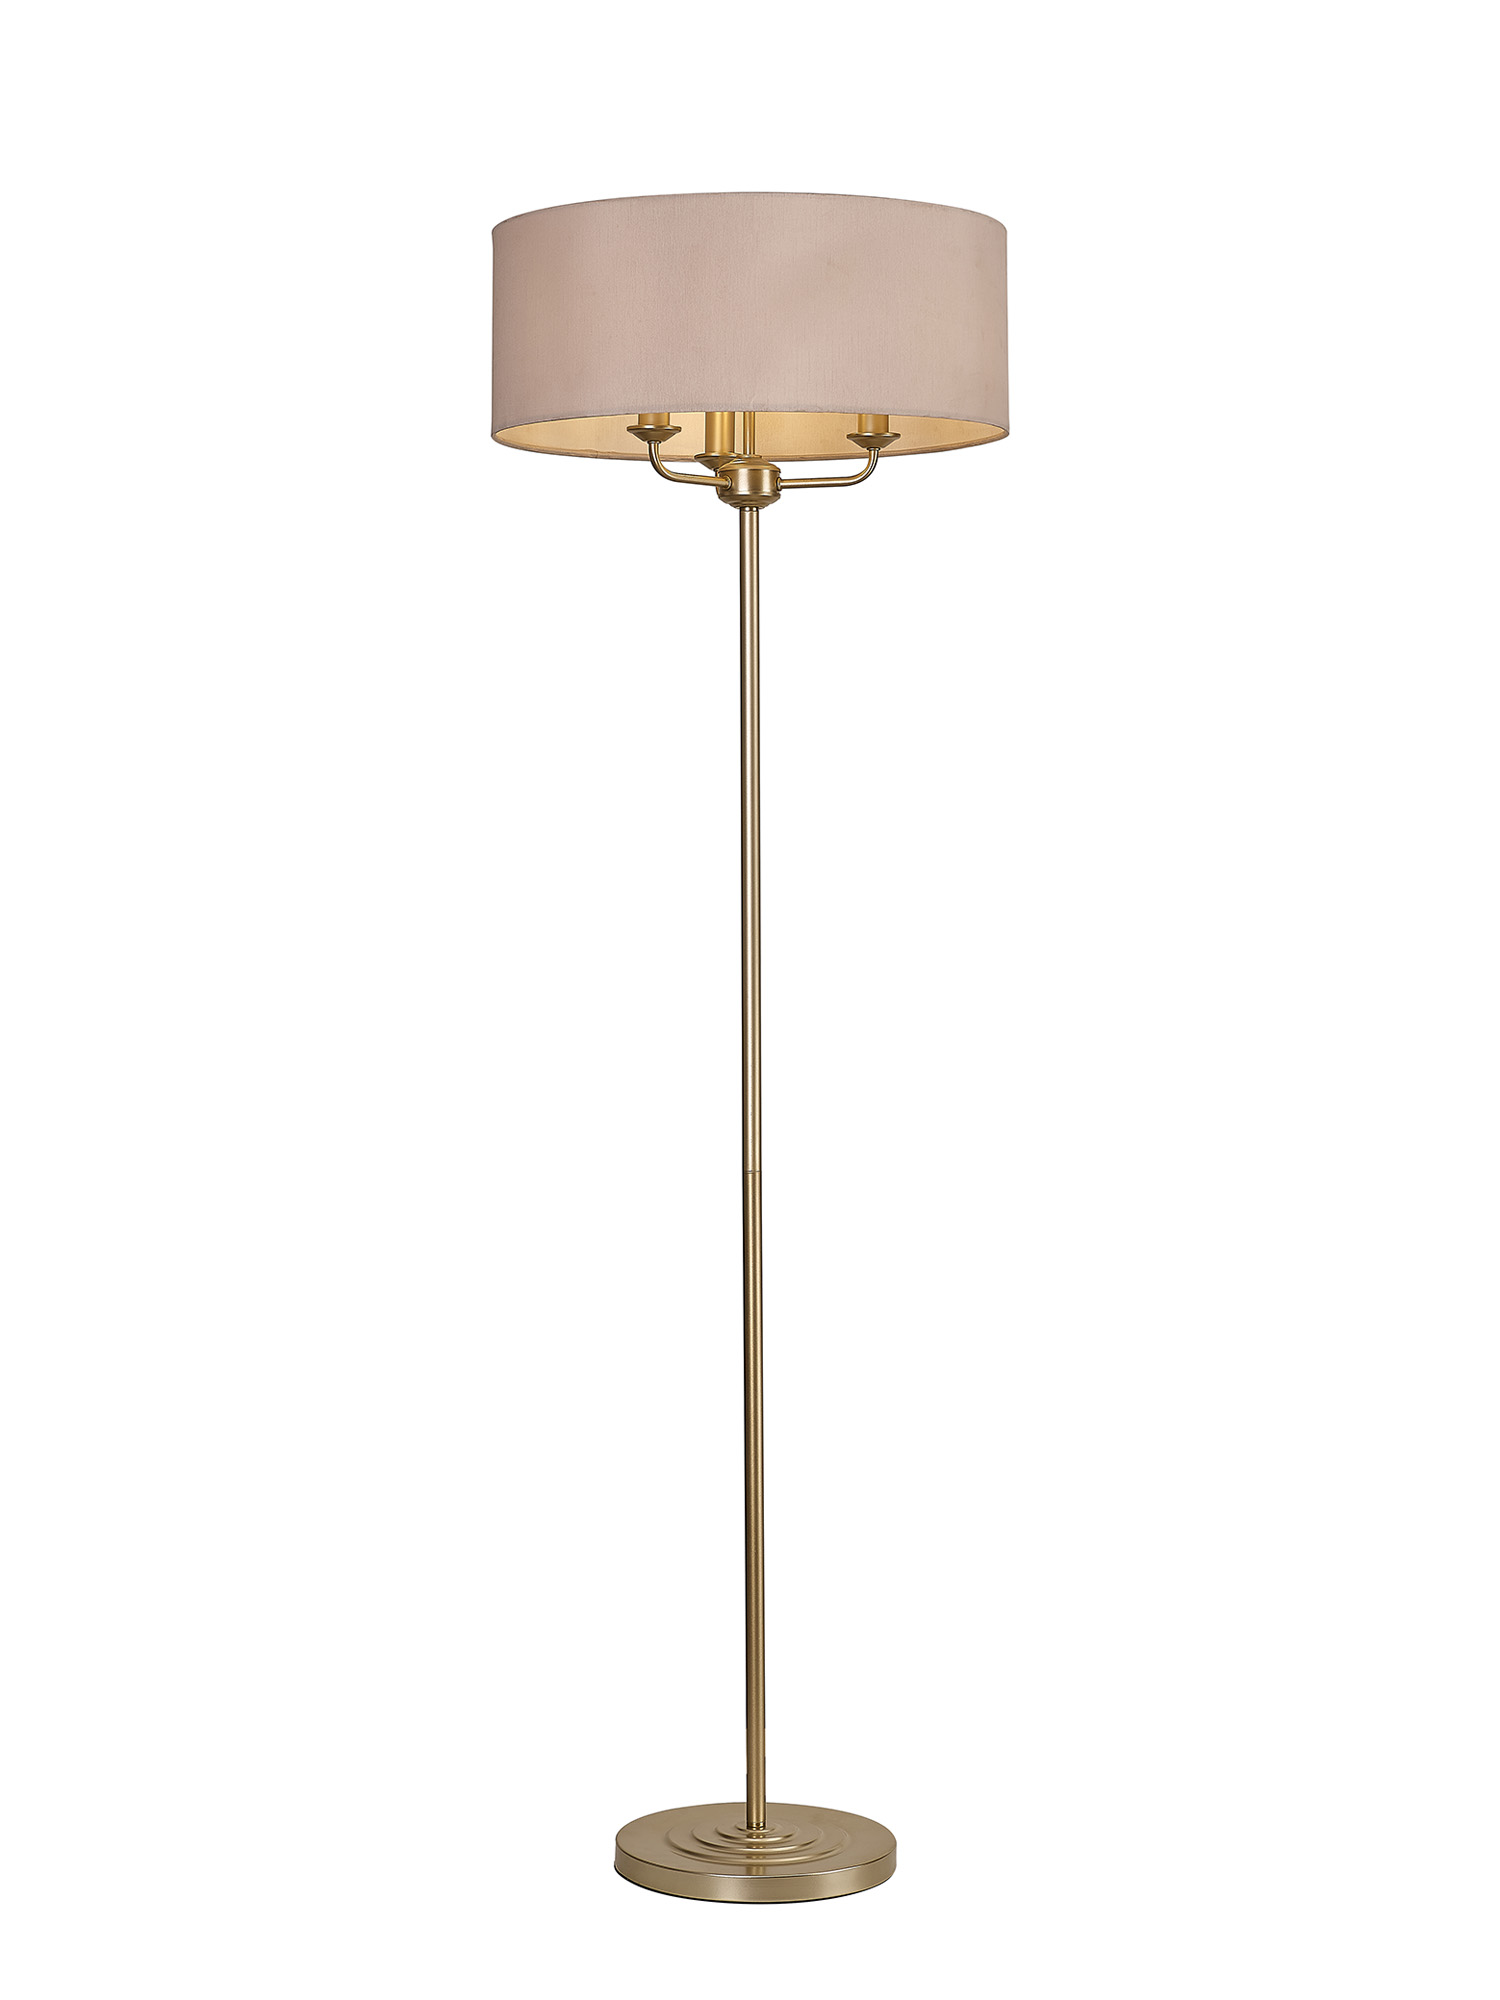 DK1002  Banyan 45cm 3 Light Floor Lamp Champagne Gold, Nude Beige